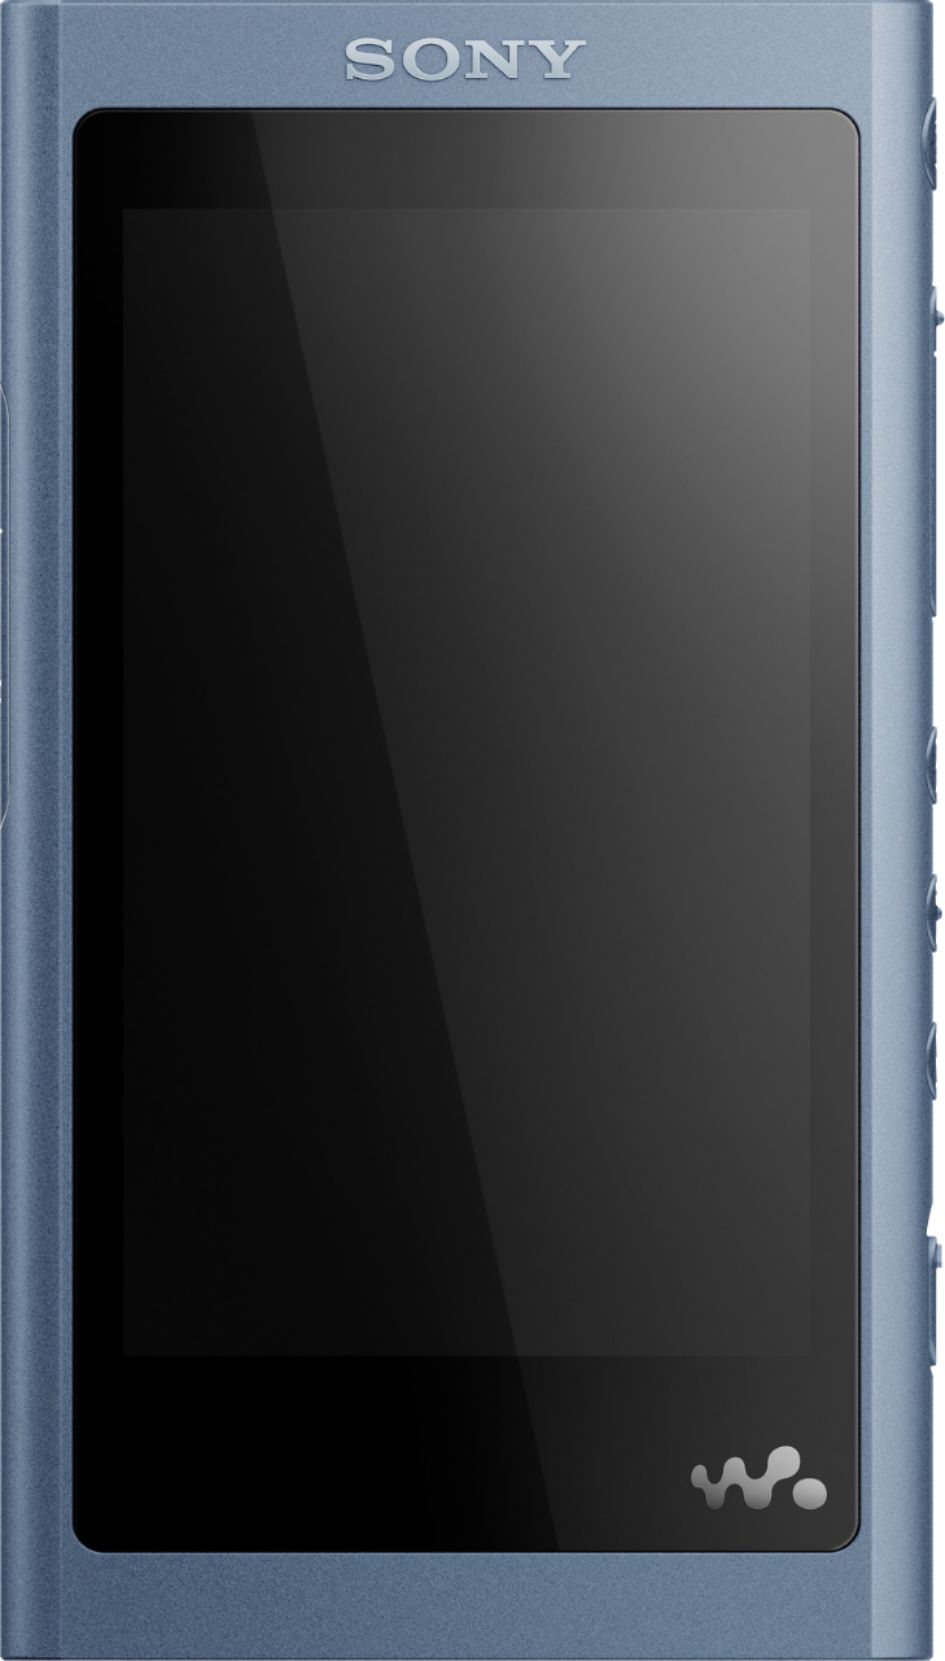 Sony Walkman NW-A55 Hi-Res 16GB* MP3 Player - Best Buy